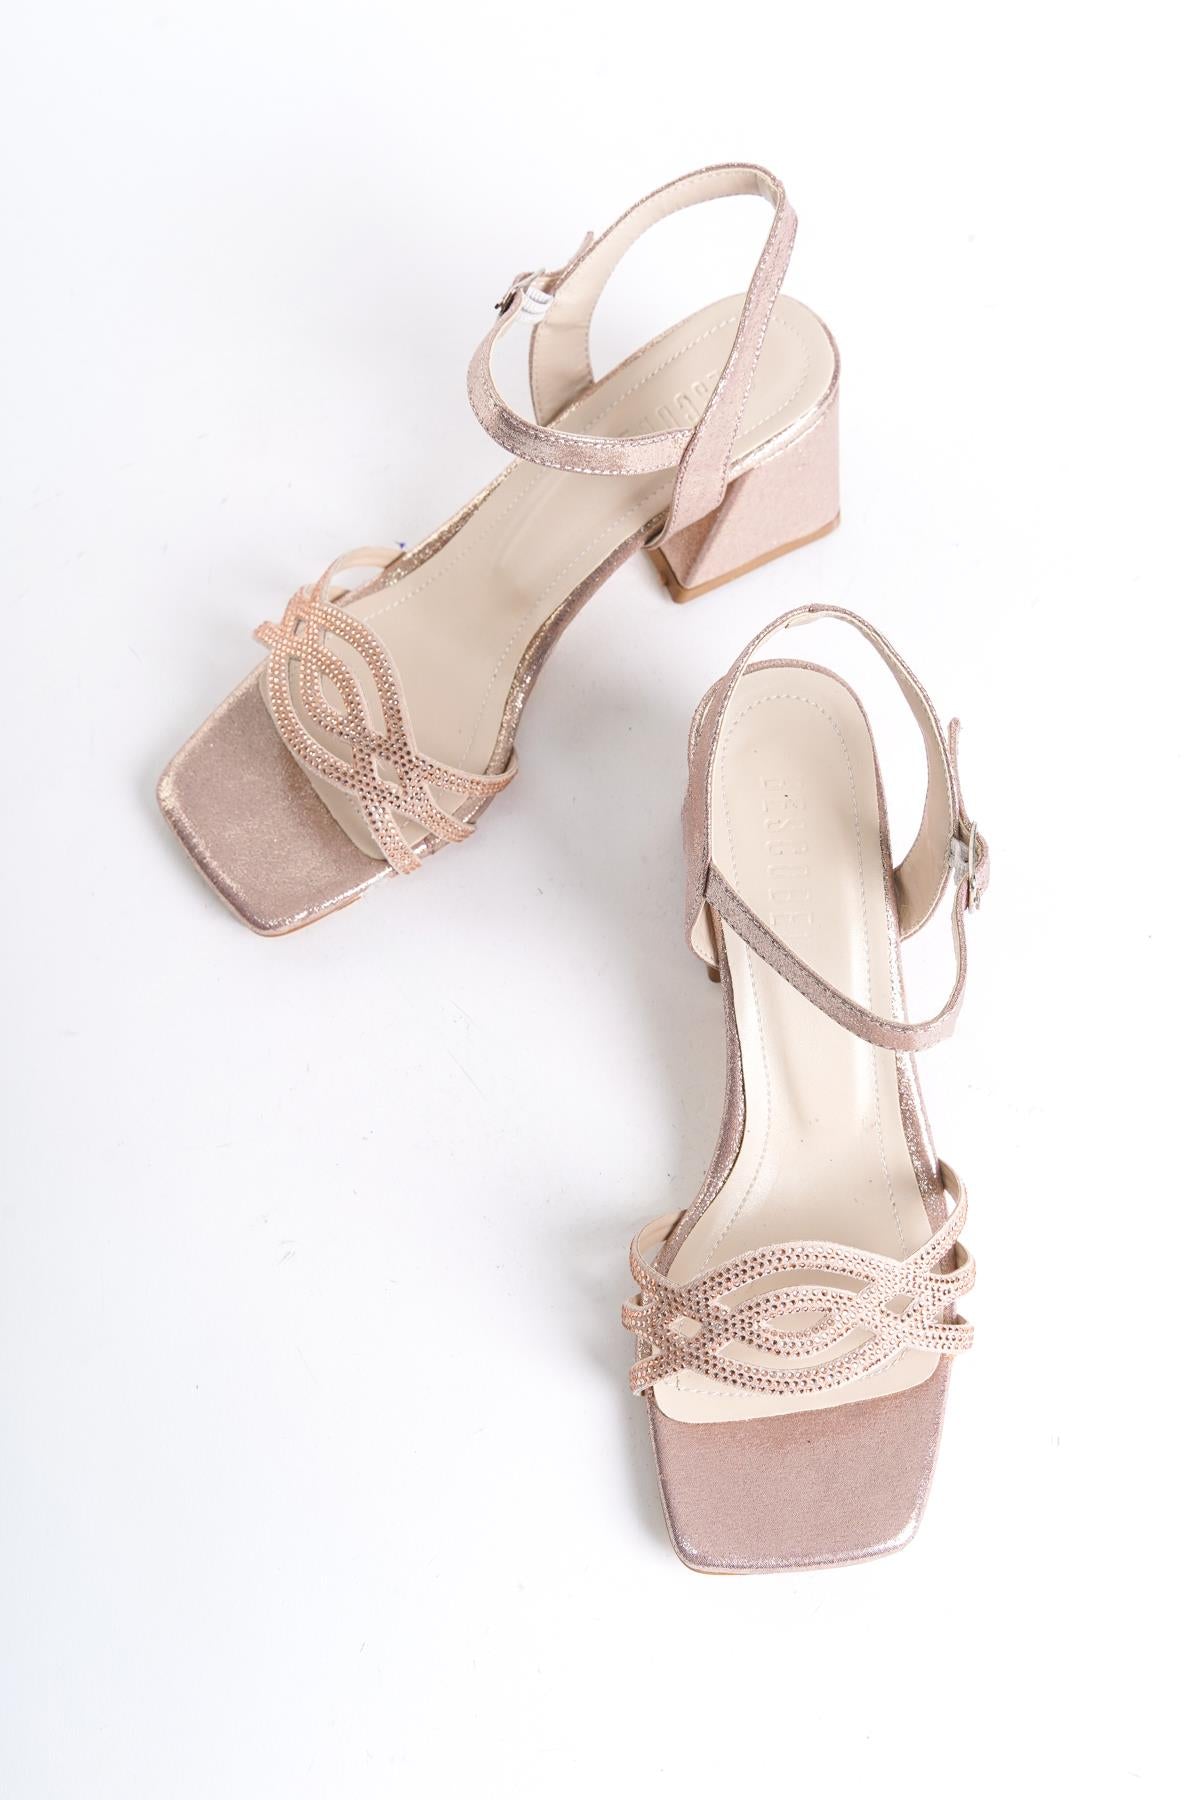 Women's Powder Yekm Low Heel Stone Evening Dress Sandals Shoes - STREETMODE™